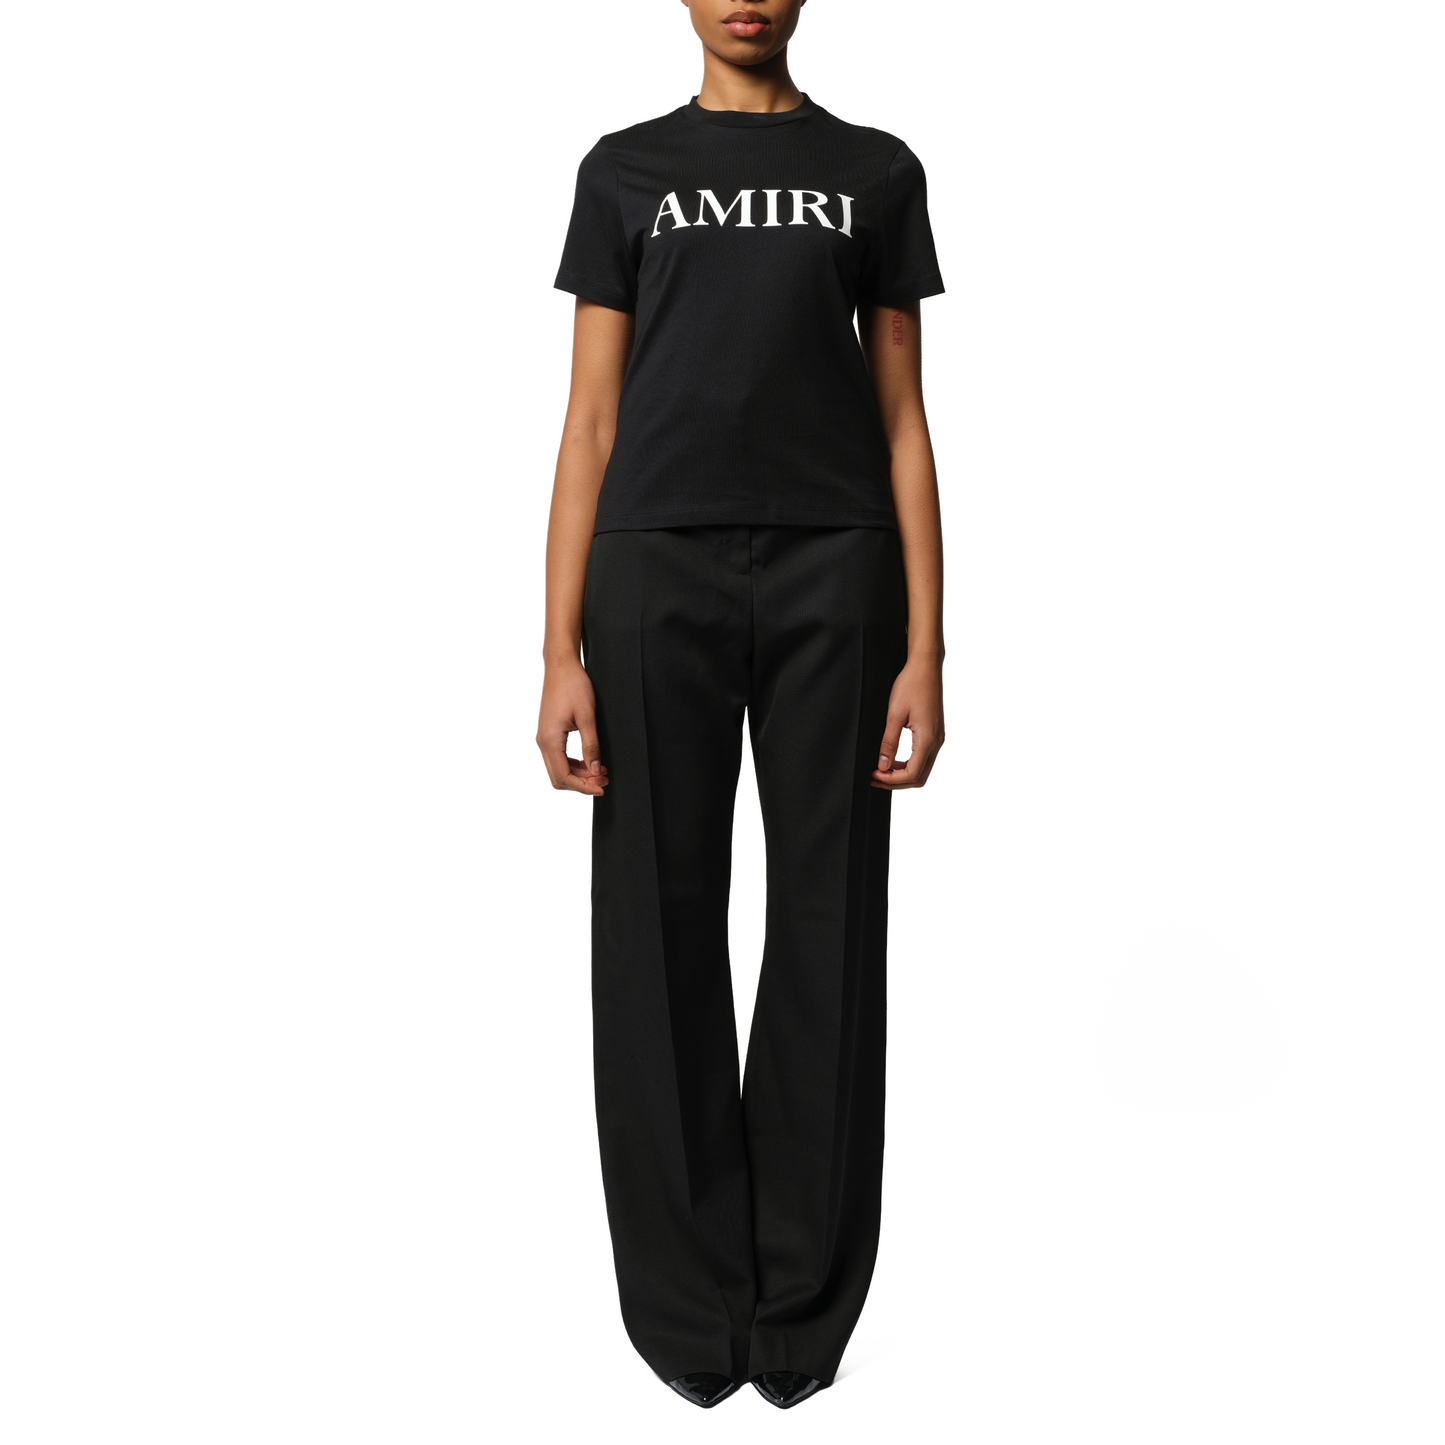 Amiri Core Logo T-Shirt in Black